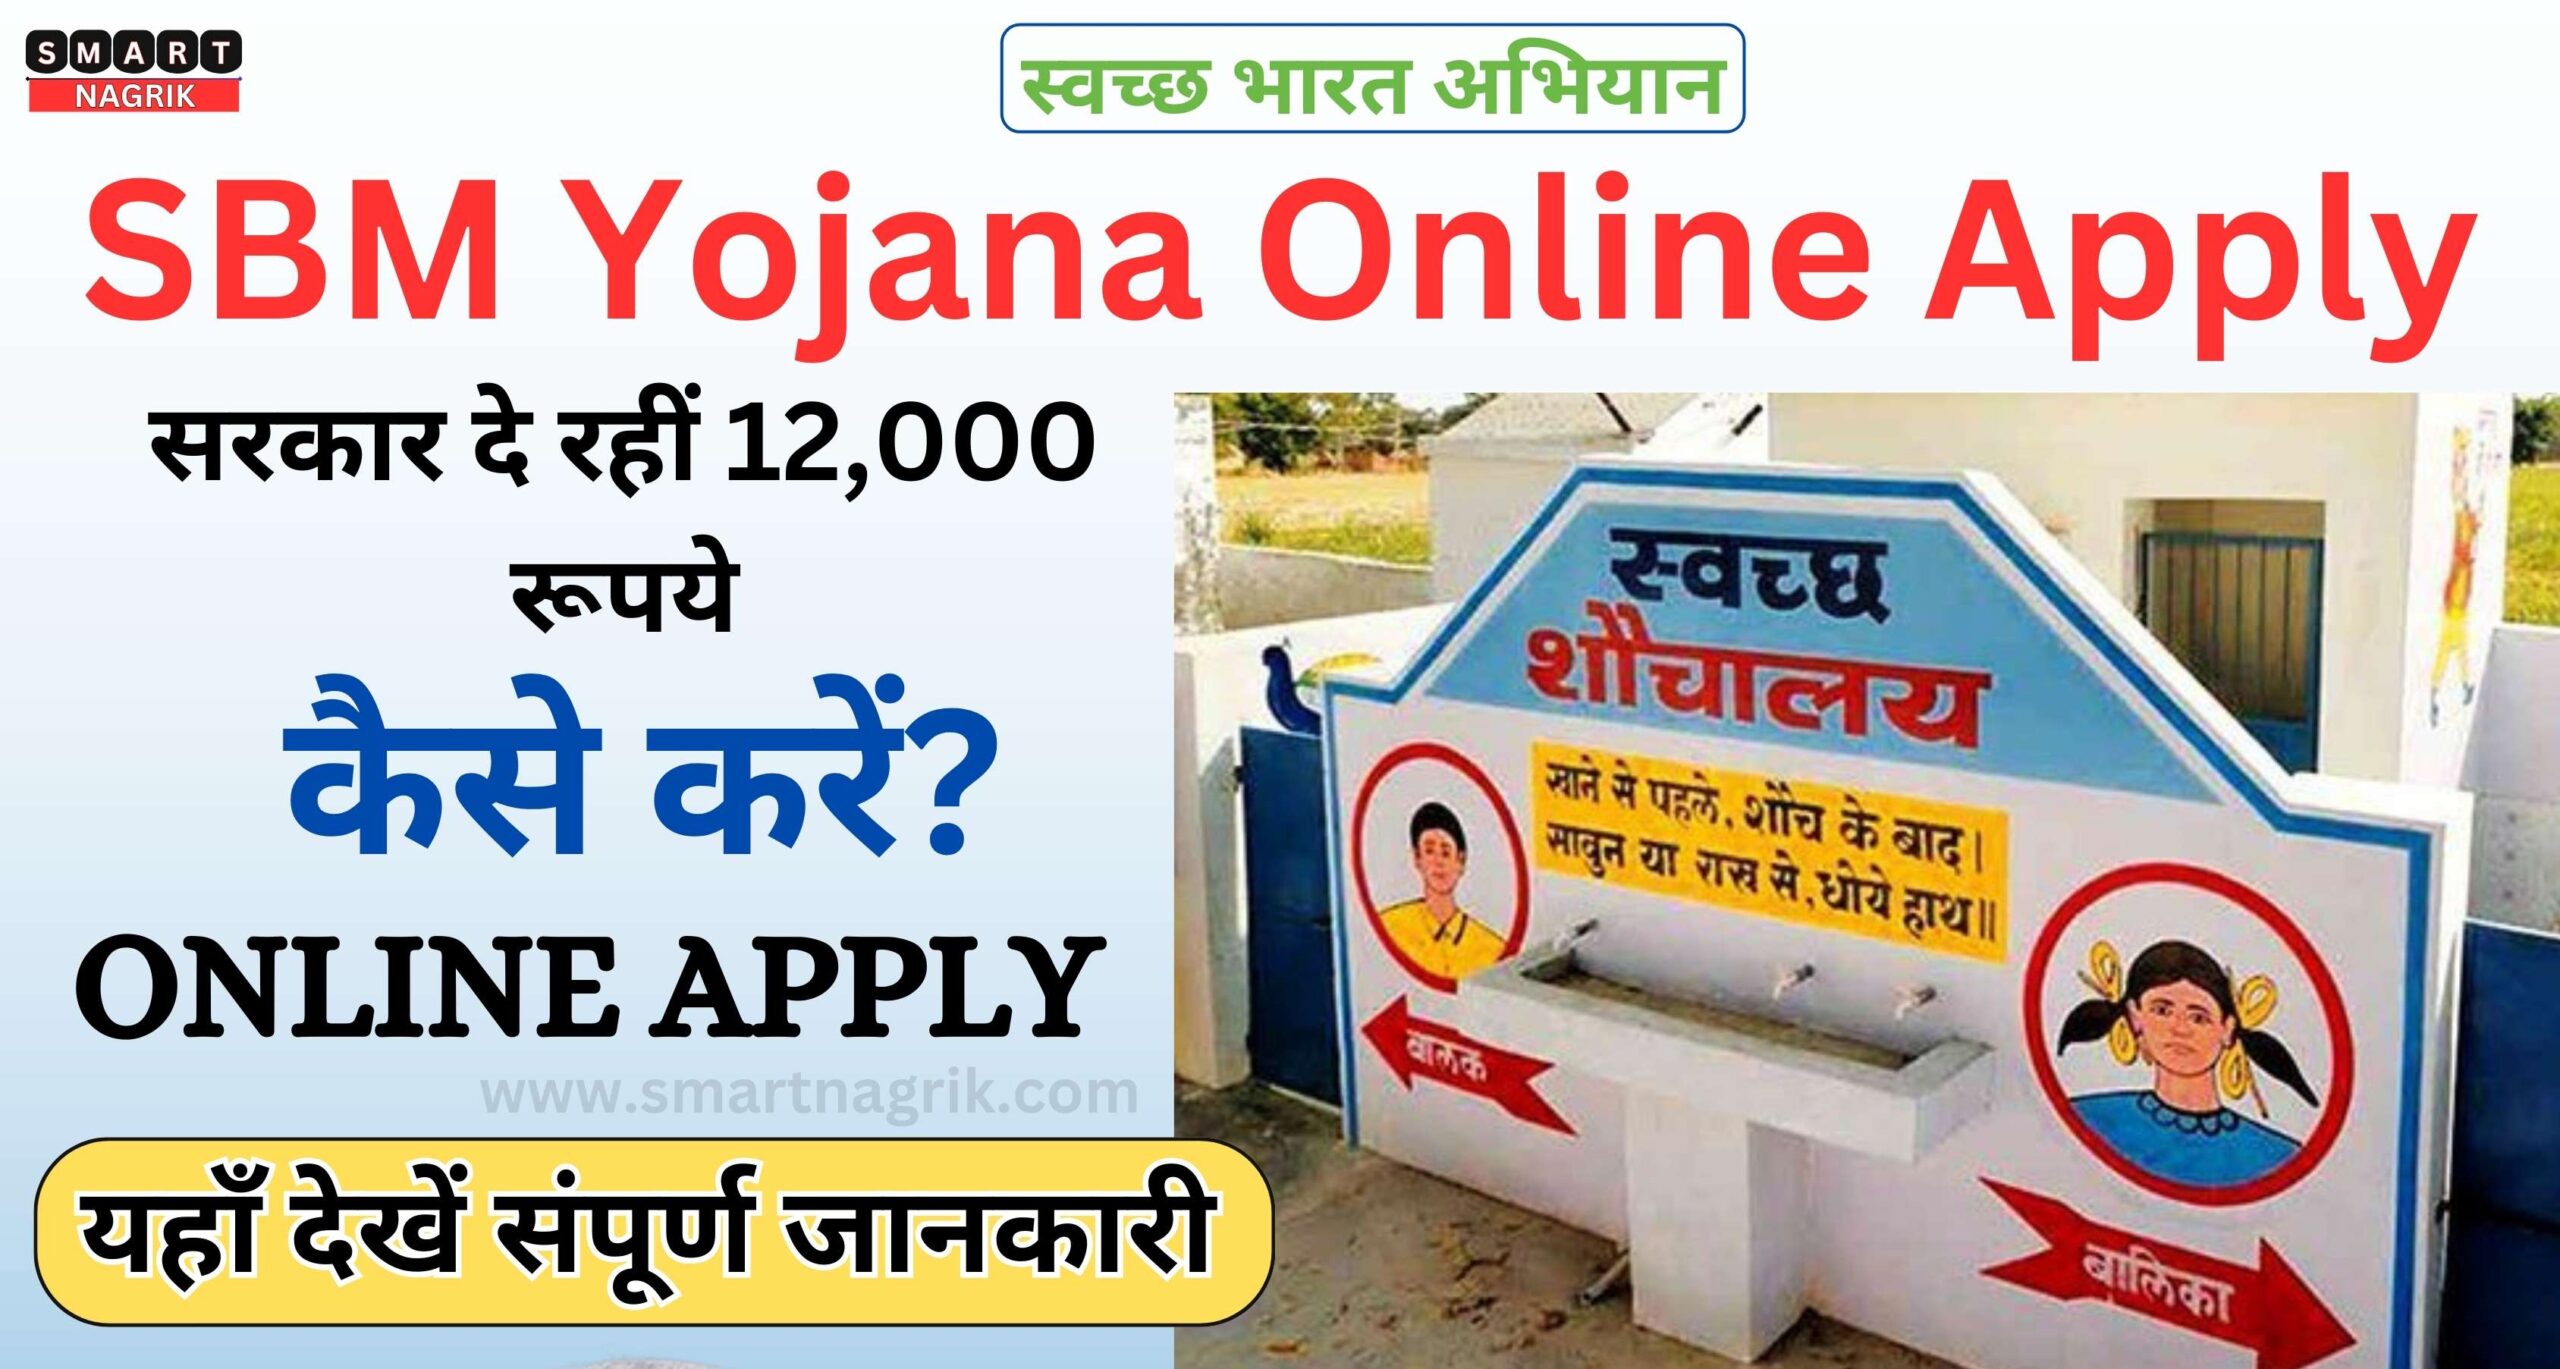 SBM Yojana Online Apply Step-by-Step SBM Yojana Online Apply Guide, 12,000rs